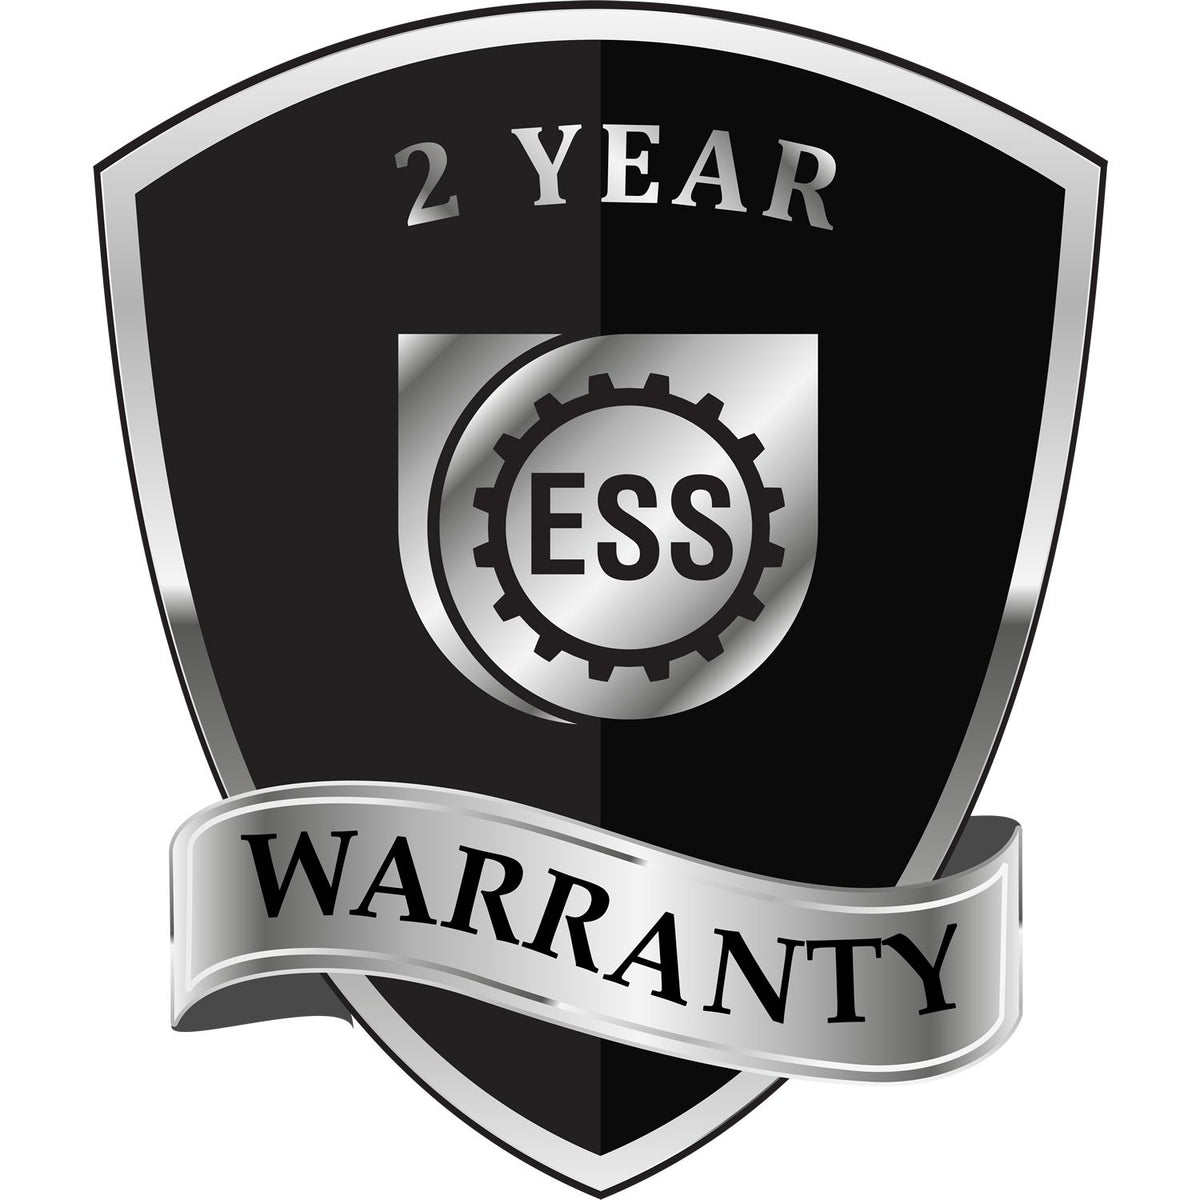 A black and silver badge or emblem showing warranty information for the Hybrid Utah Geologist Seal